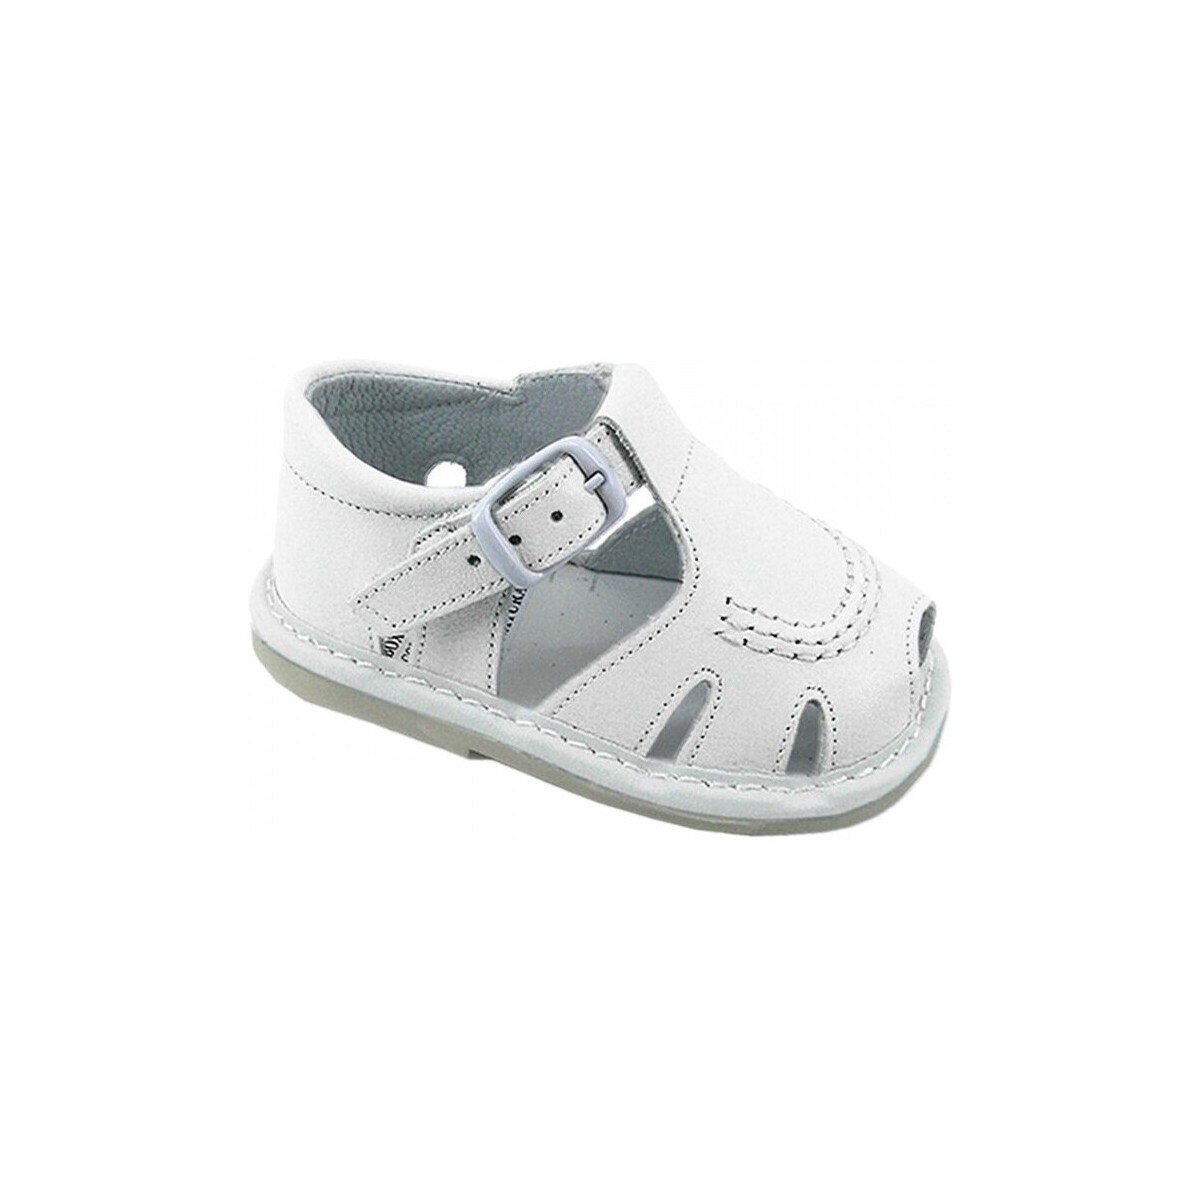 Zapatos Sandalias Colores 25387-15 Blanco